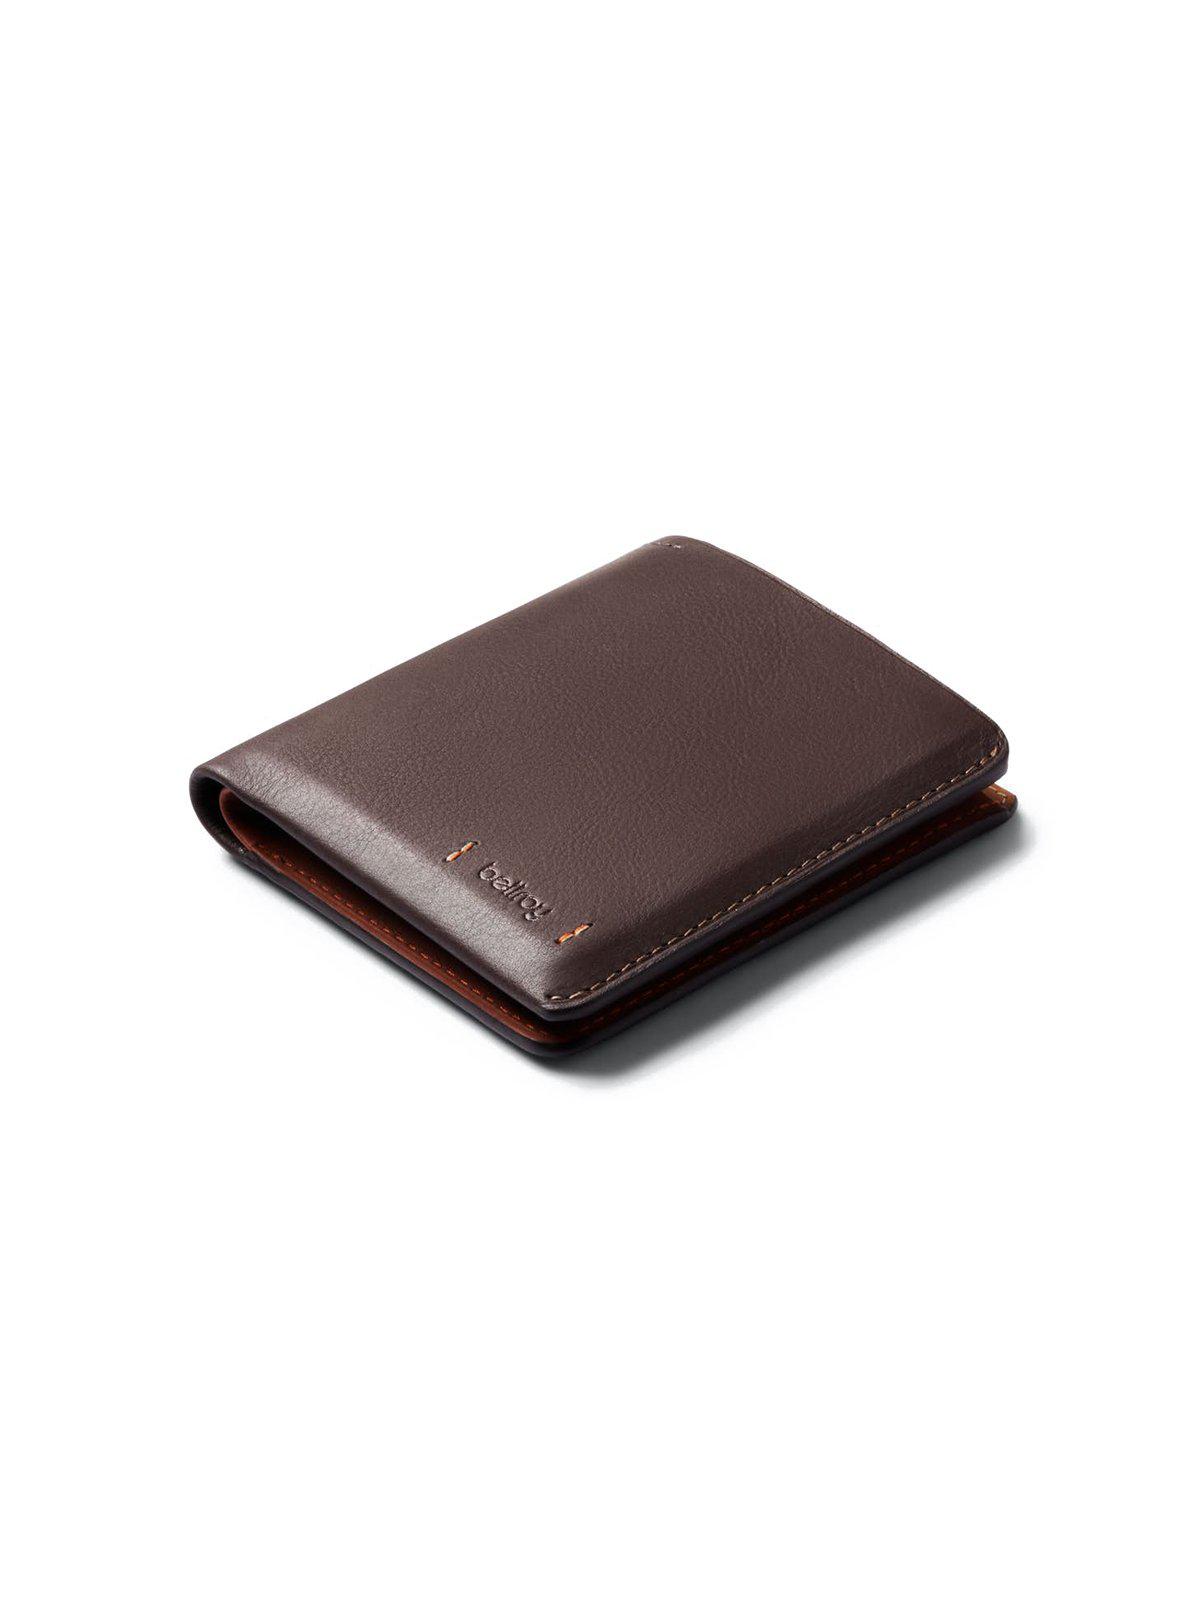 Bellroy Note Sleeve Wallet Premium Edition Aragon RFID